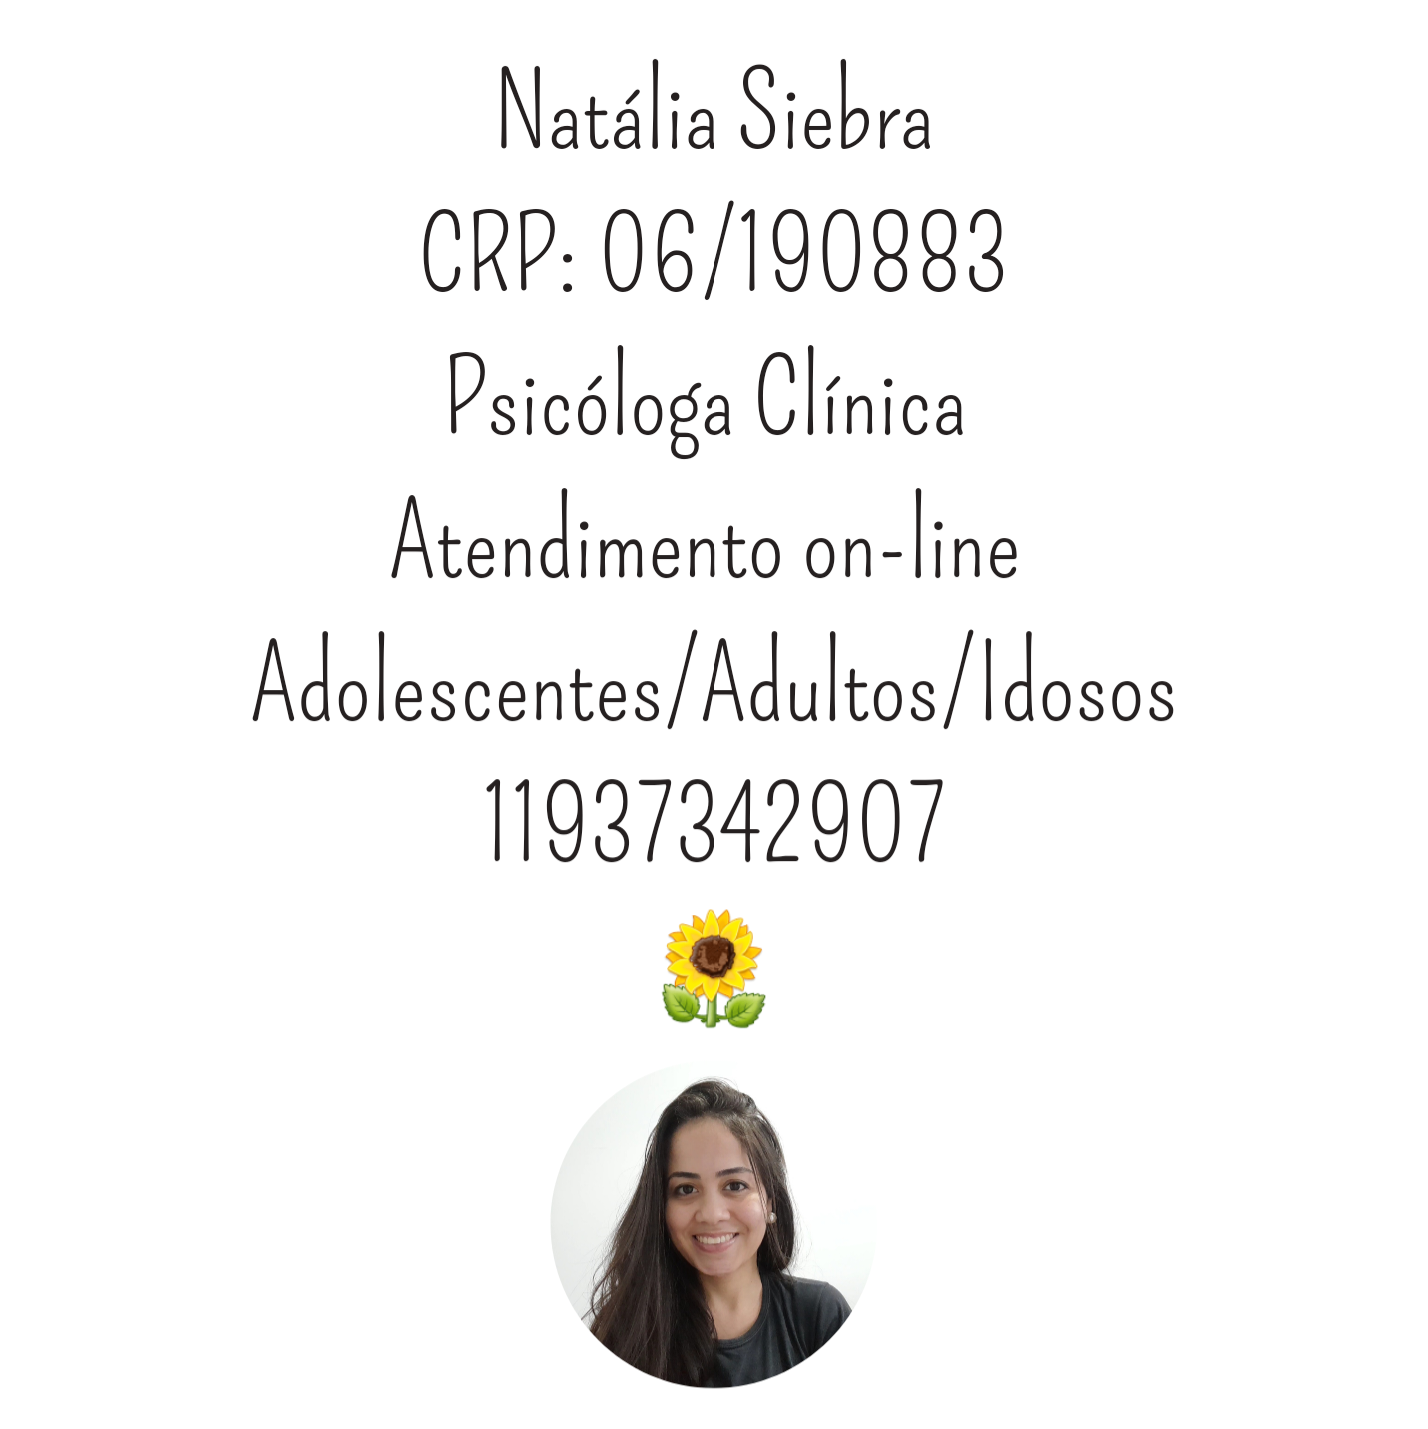 Natalia Siebra
CRP: 06/190883
Psicéloga Clinica
Atendimento on-line
Adolescentes/Adultos/ldosos
11937342907

@

 

&